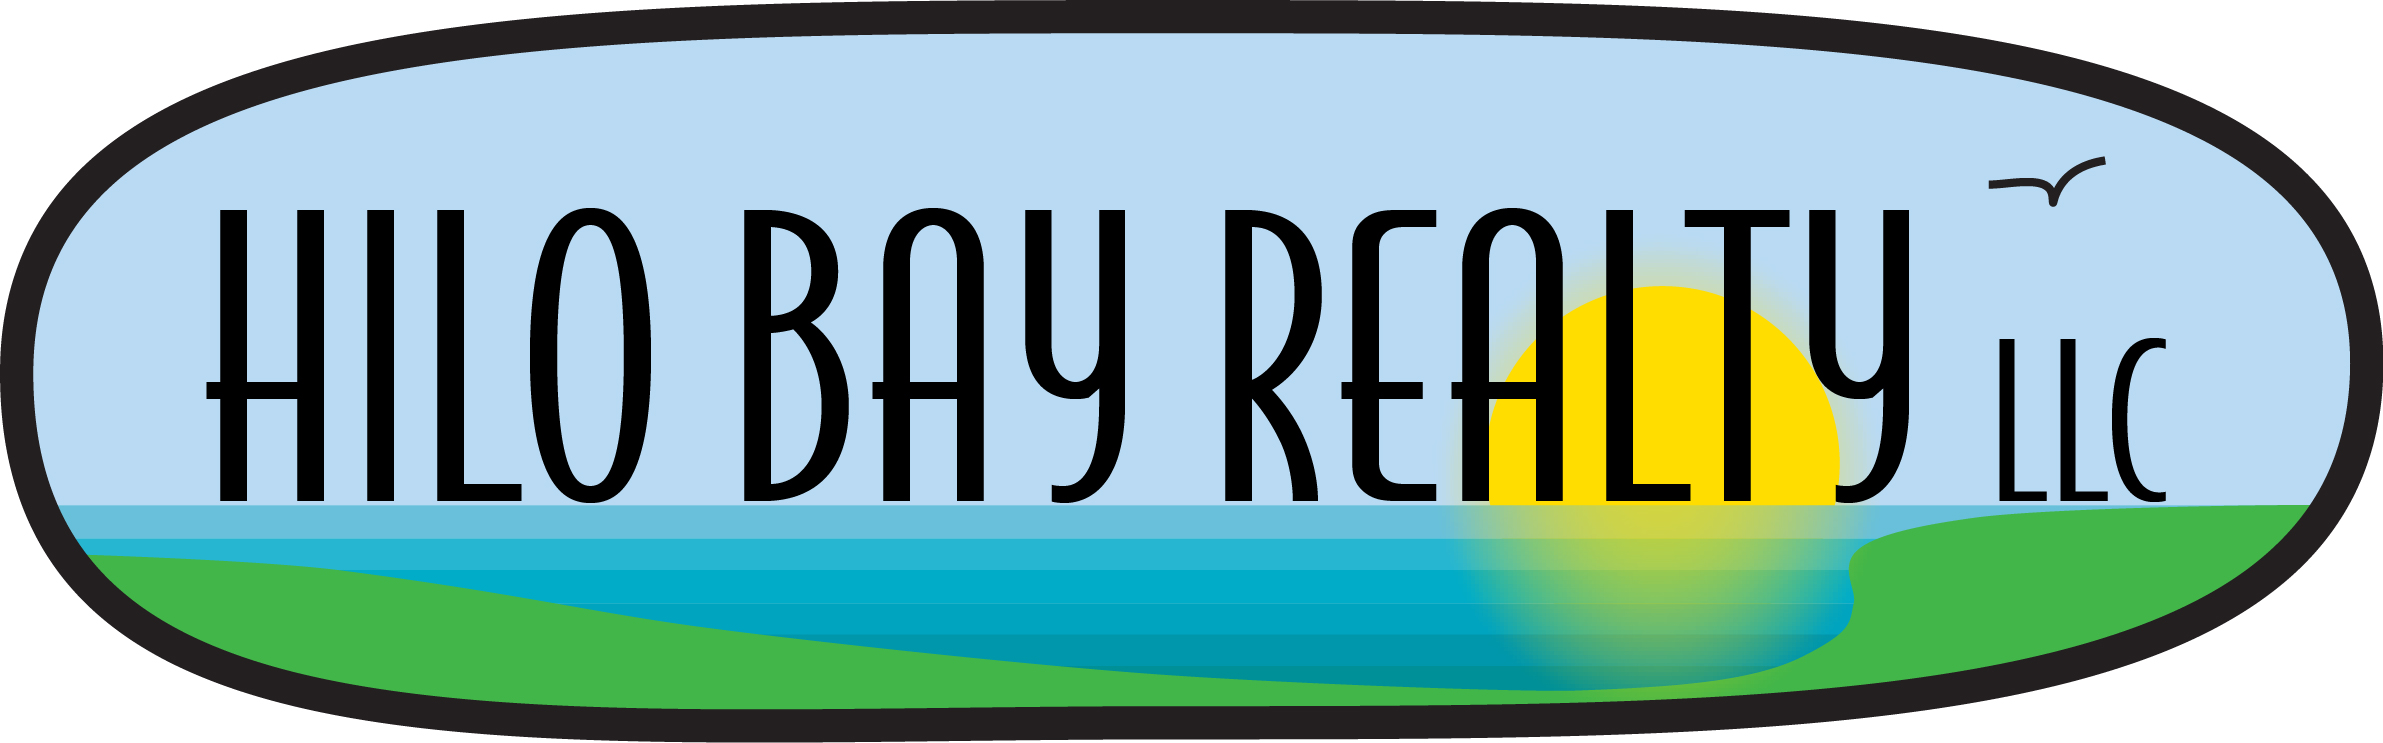 Hilo Bay Realty